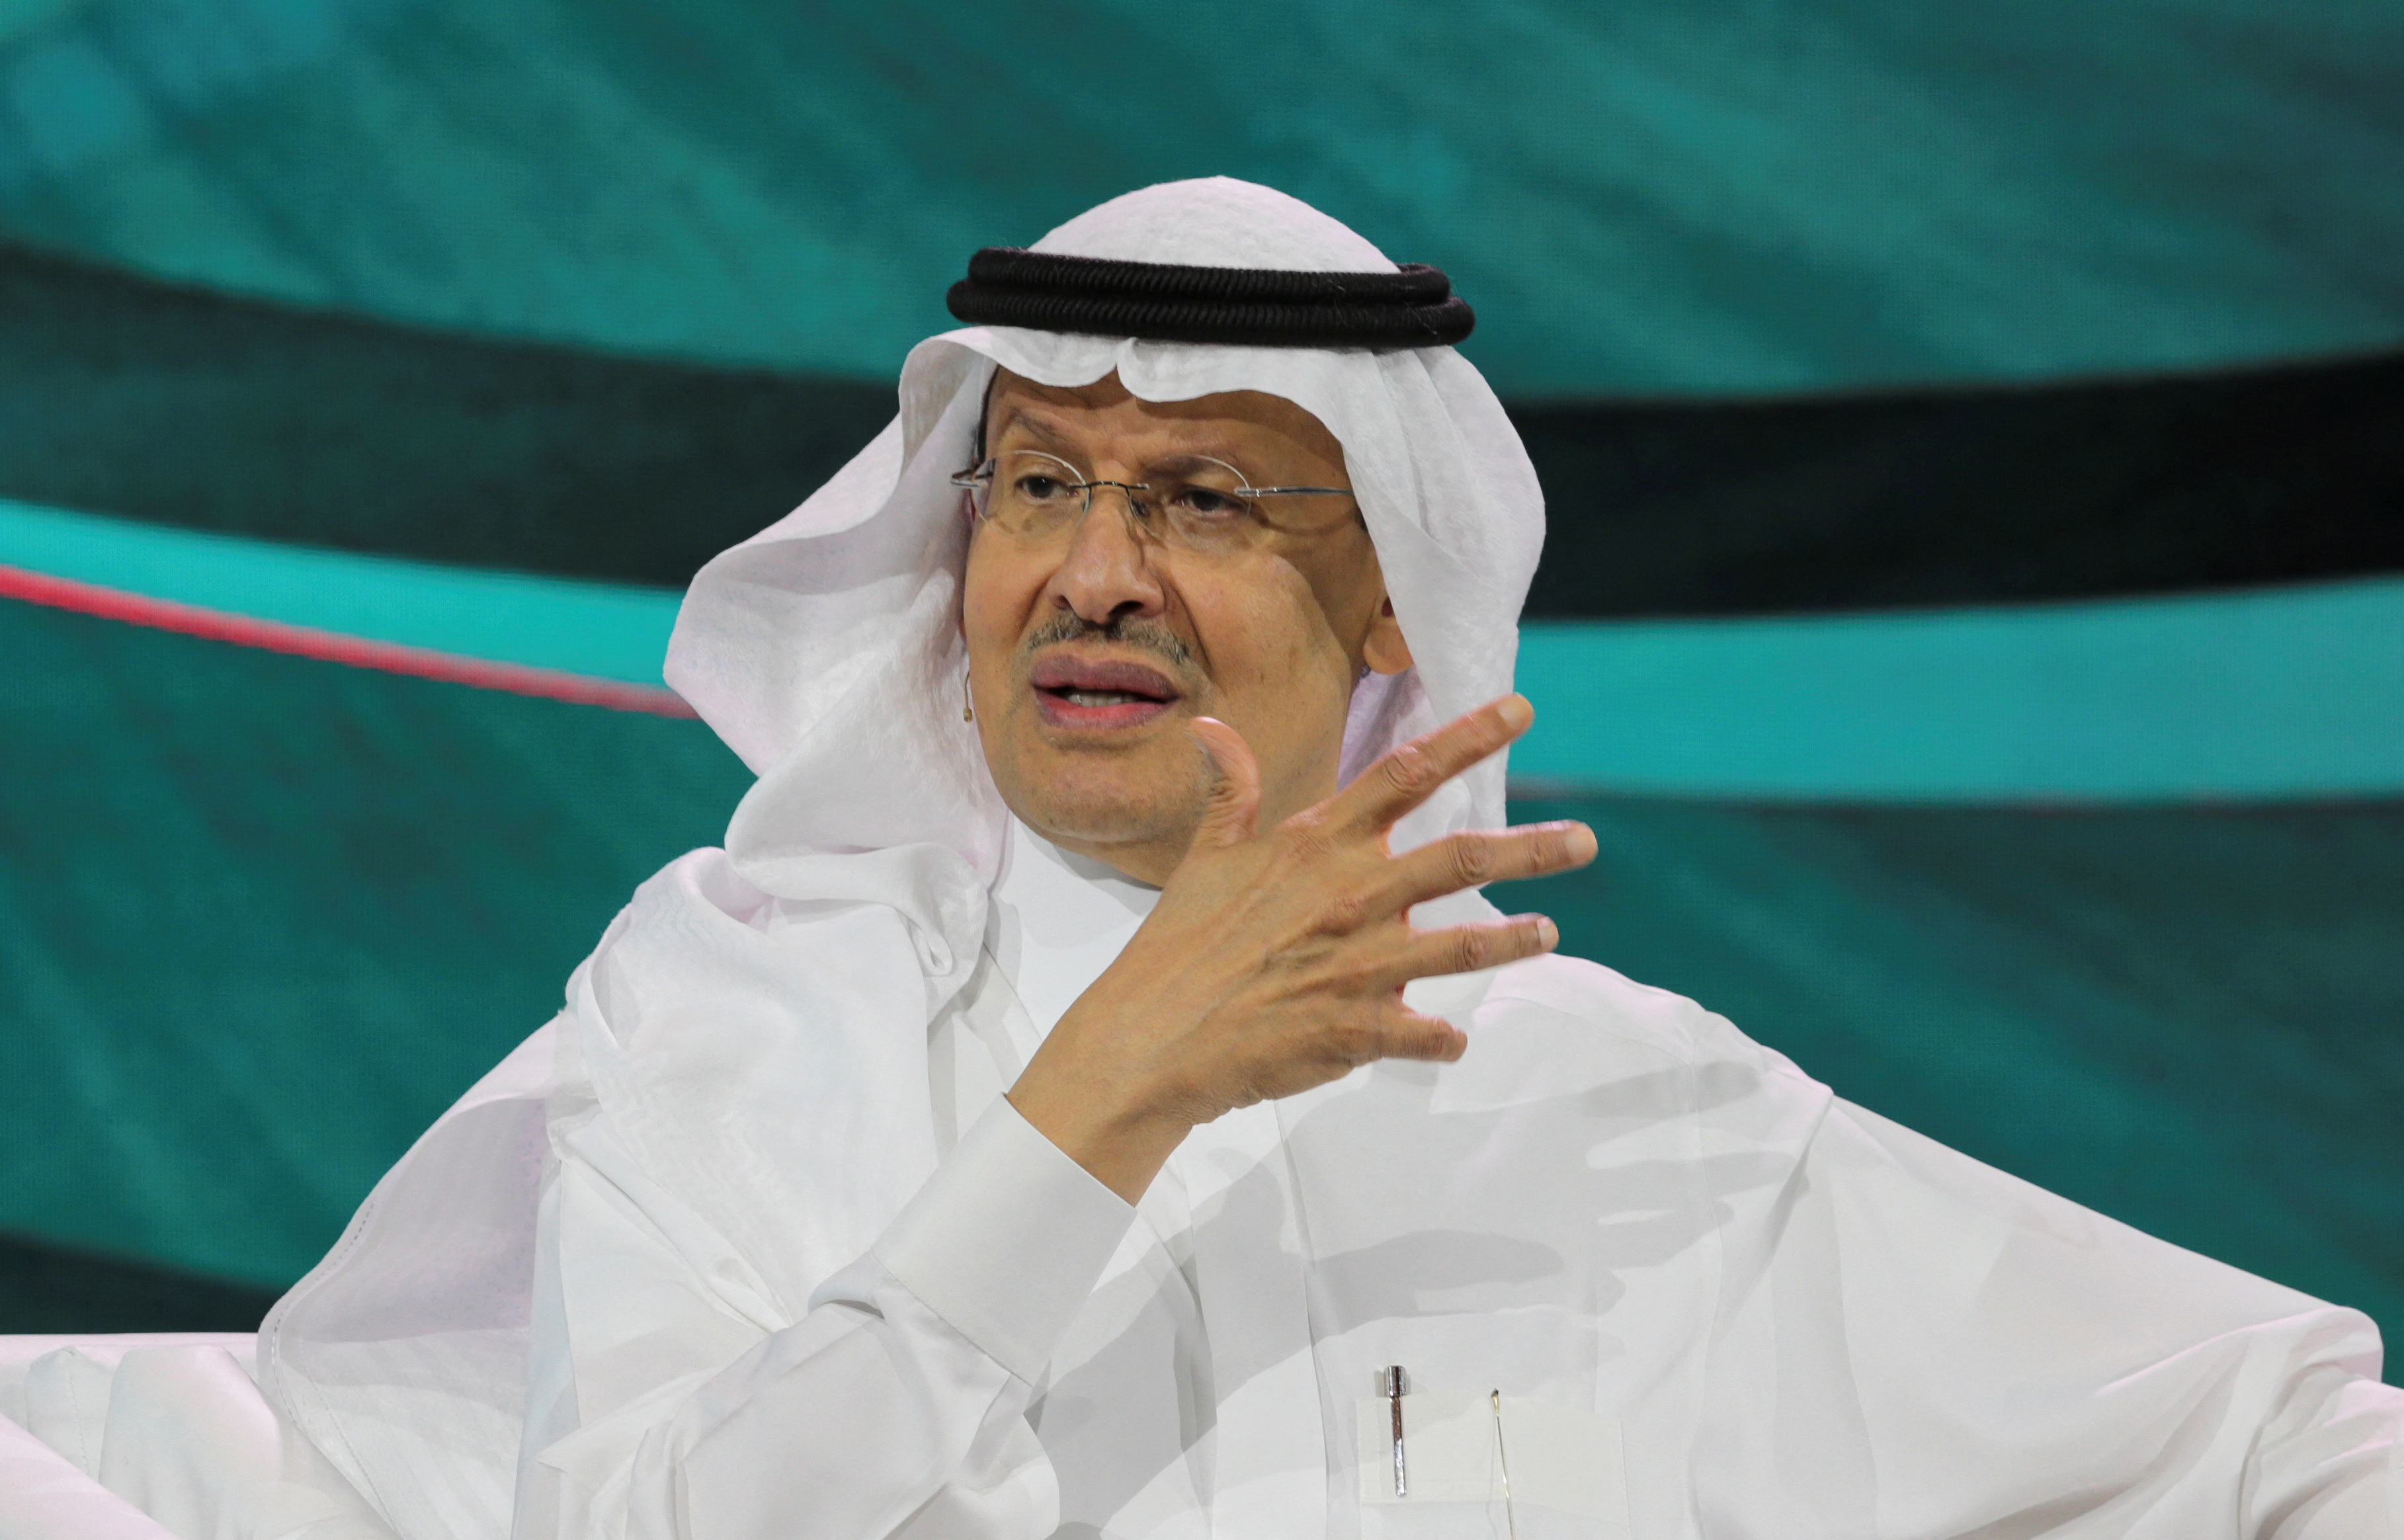 Saudi Arabia's Minister of Energy Prince Abdulaziz bin Salman Al-Saud speaks during 10th Arab-China Business Conference in Riyadh, Saudi Arabia